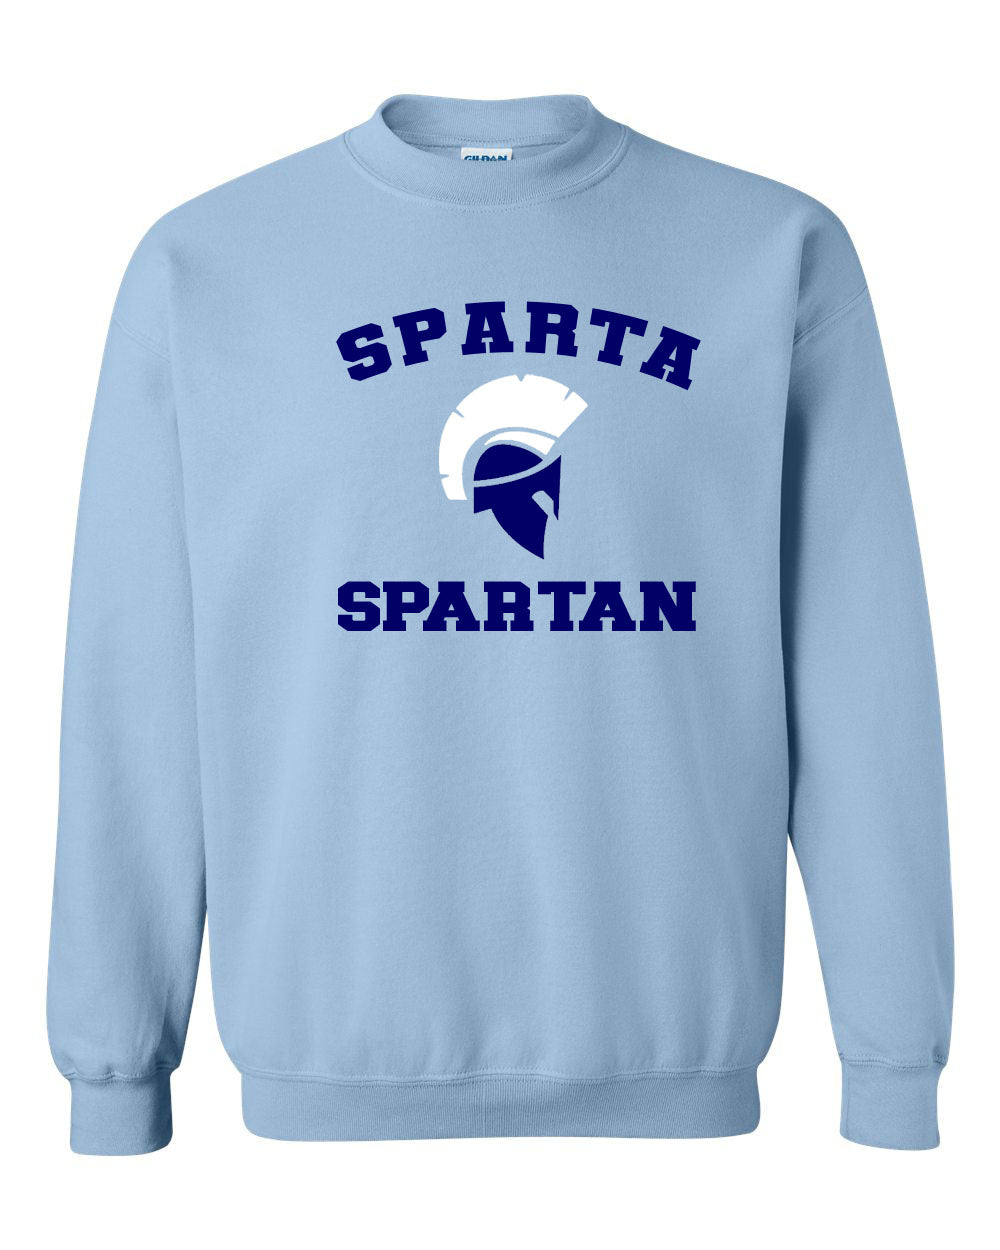 Sparta School Design 1 non hooded sweatshirt